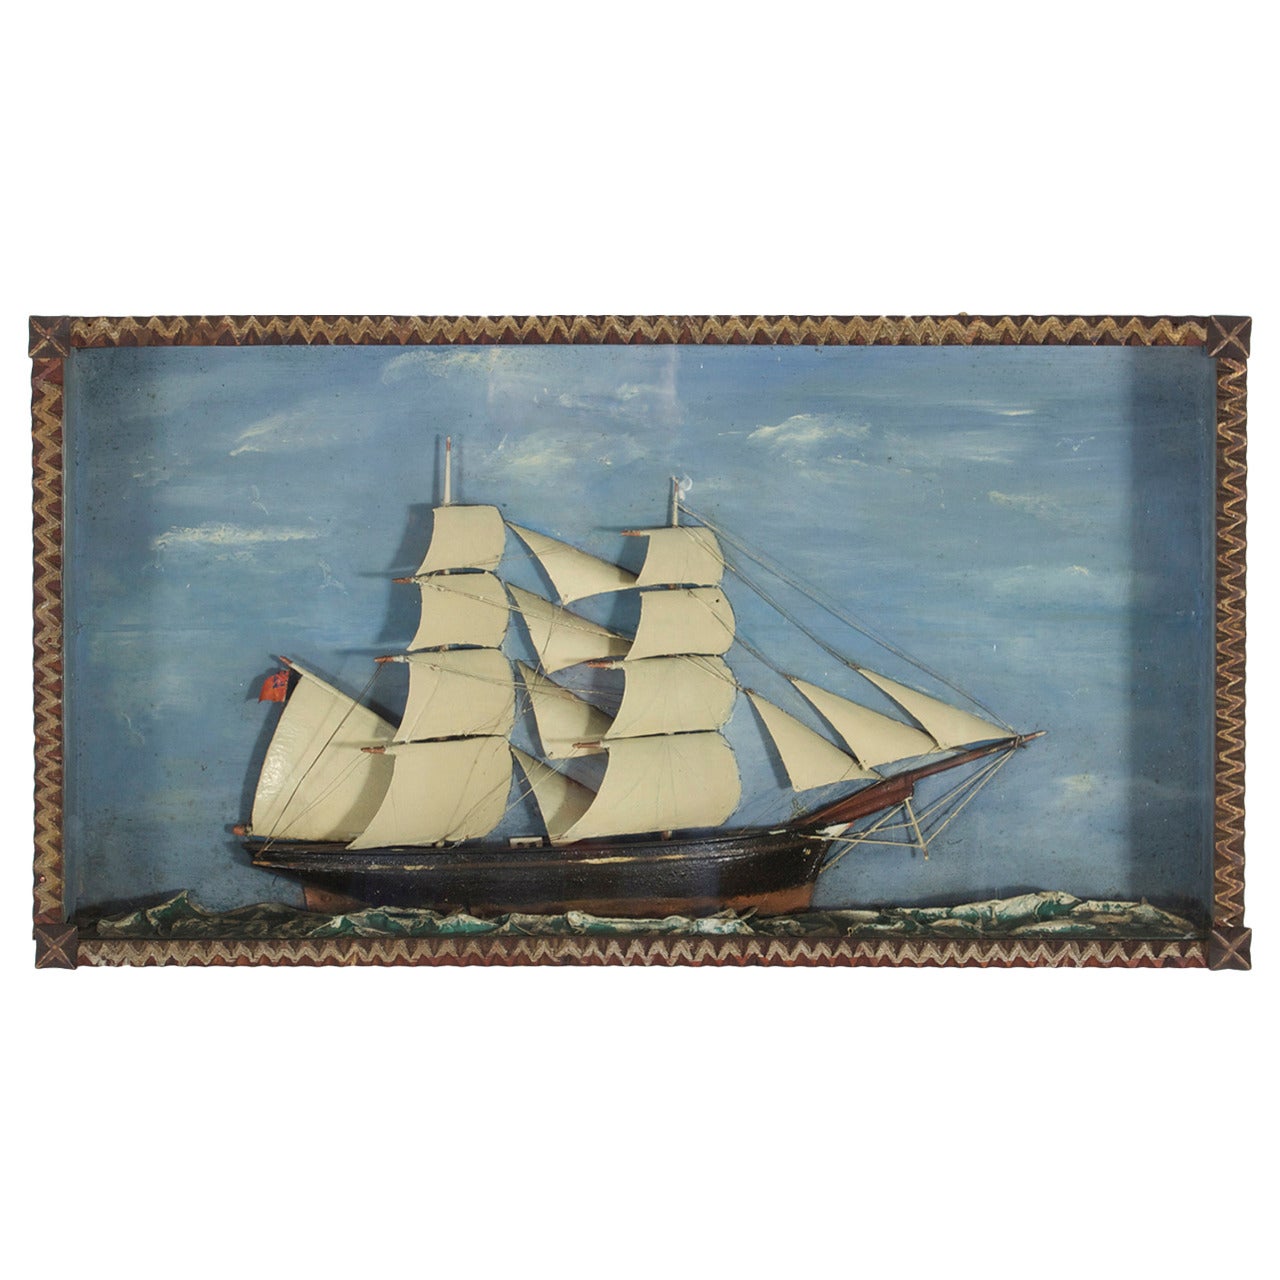 19th C. English Sailing Ship Diorama